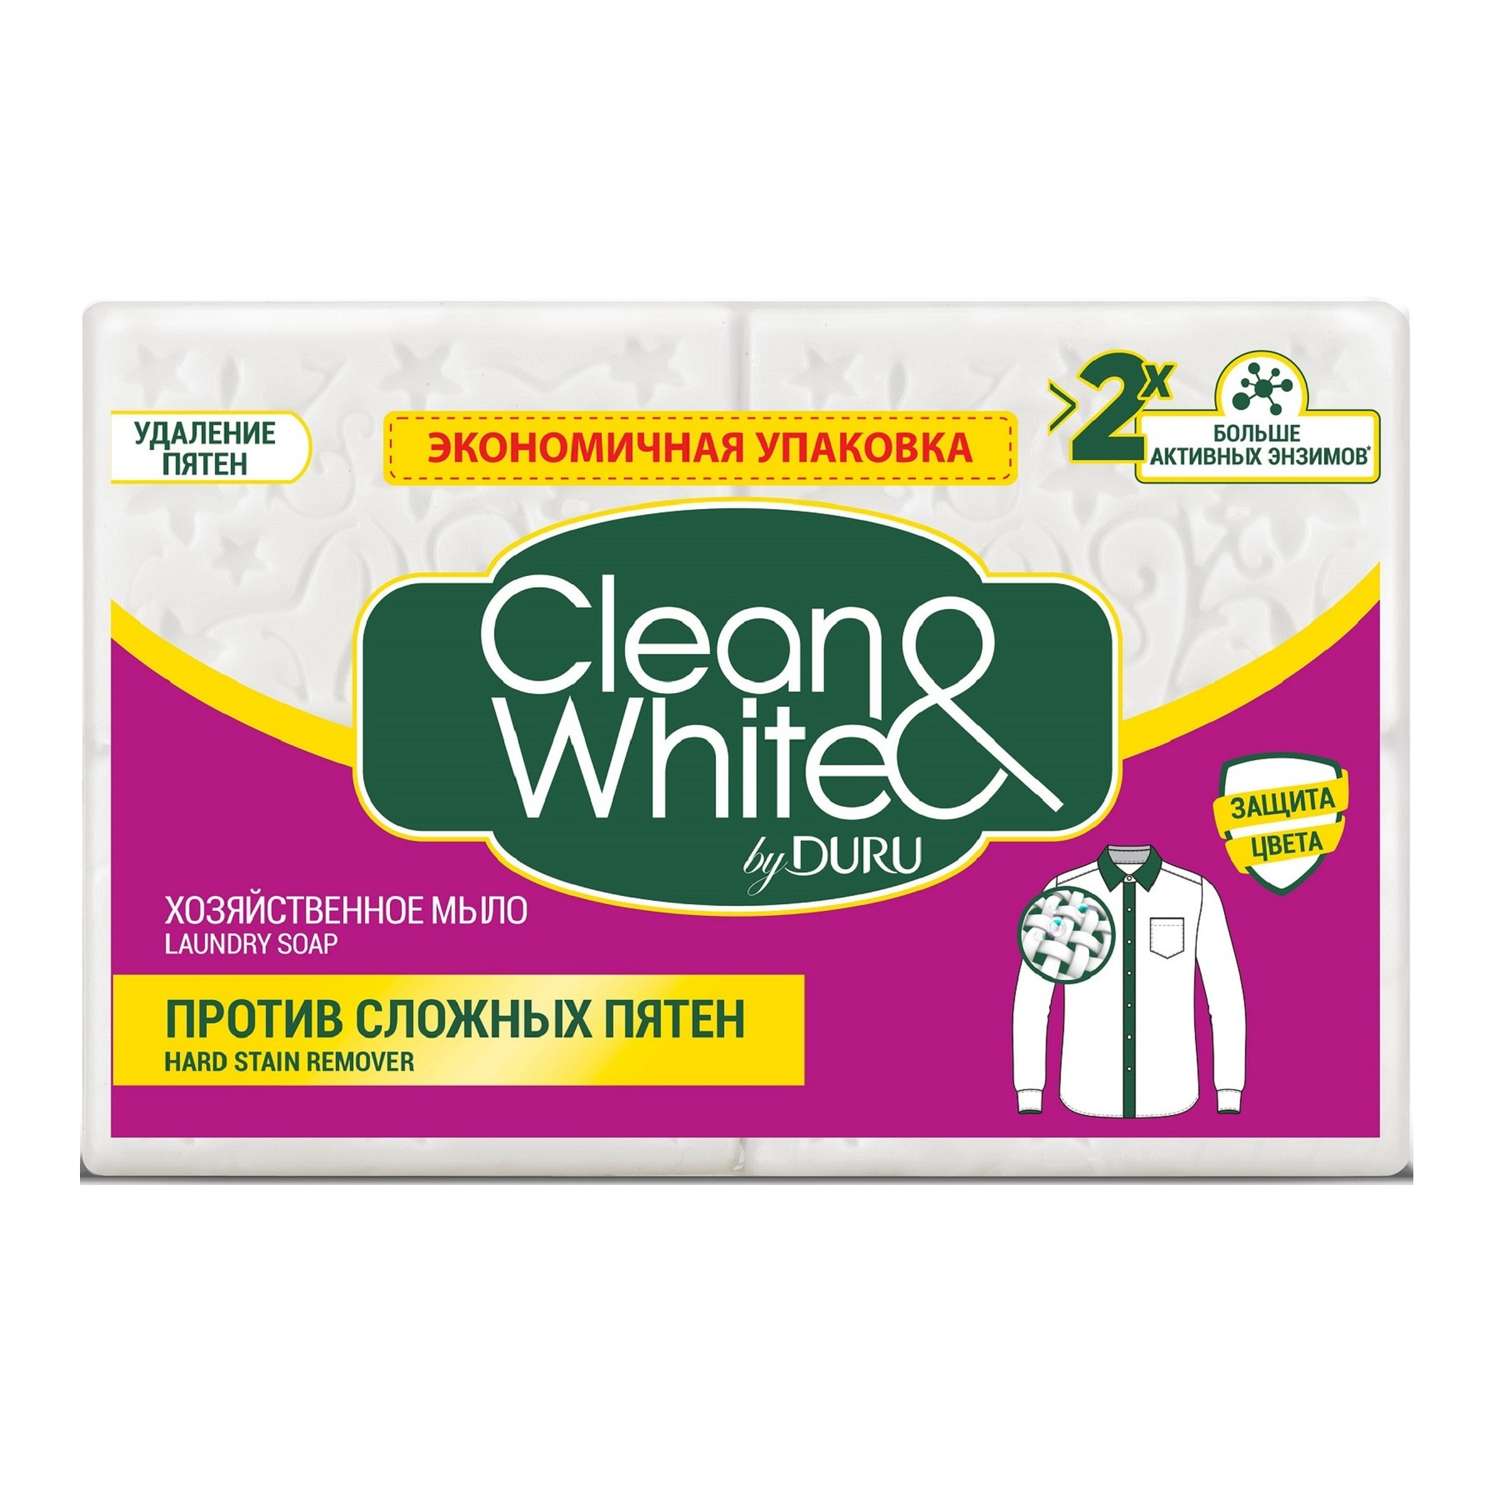 Мыло хозяйственное DURU Clean White против сложных пятен 4 шт х 120г - фото 1